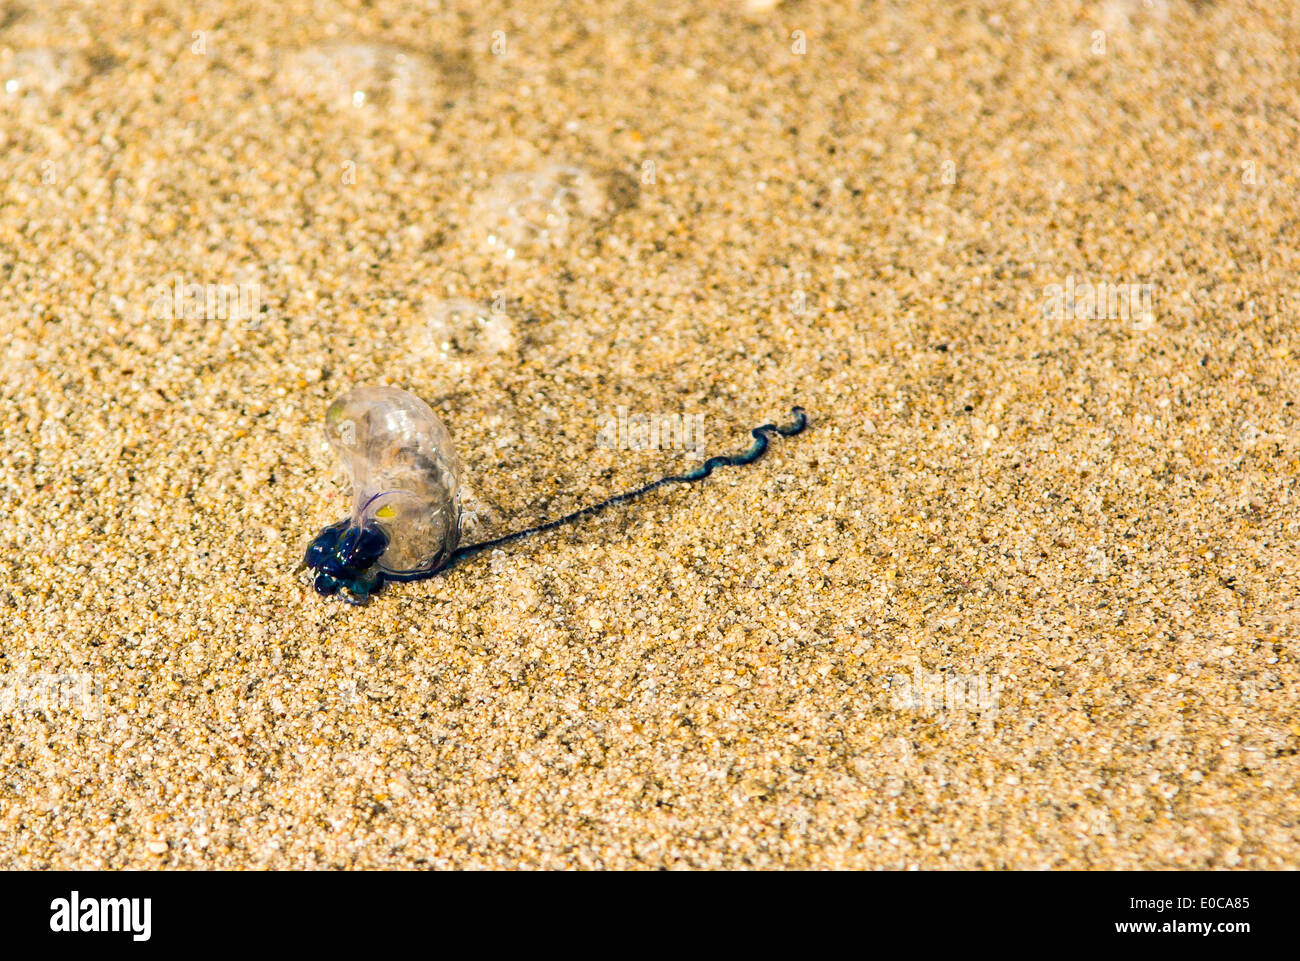 Portuguese Man-O-War jellyfish washed up on Kailua Beach, Oahu, Hawaii, USA Stock Photo